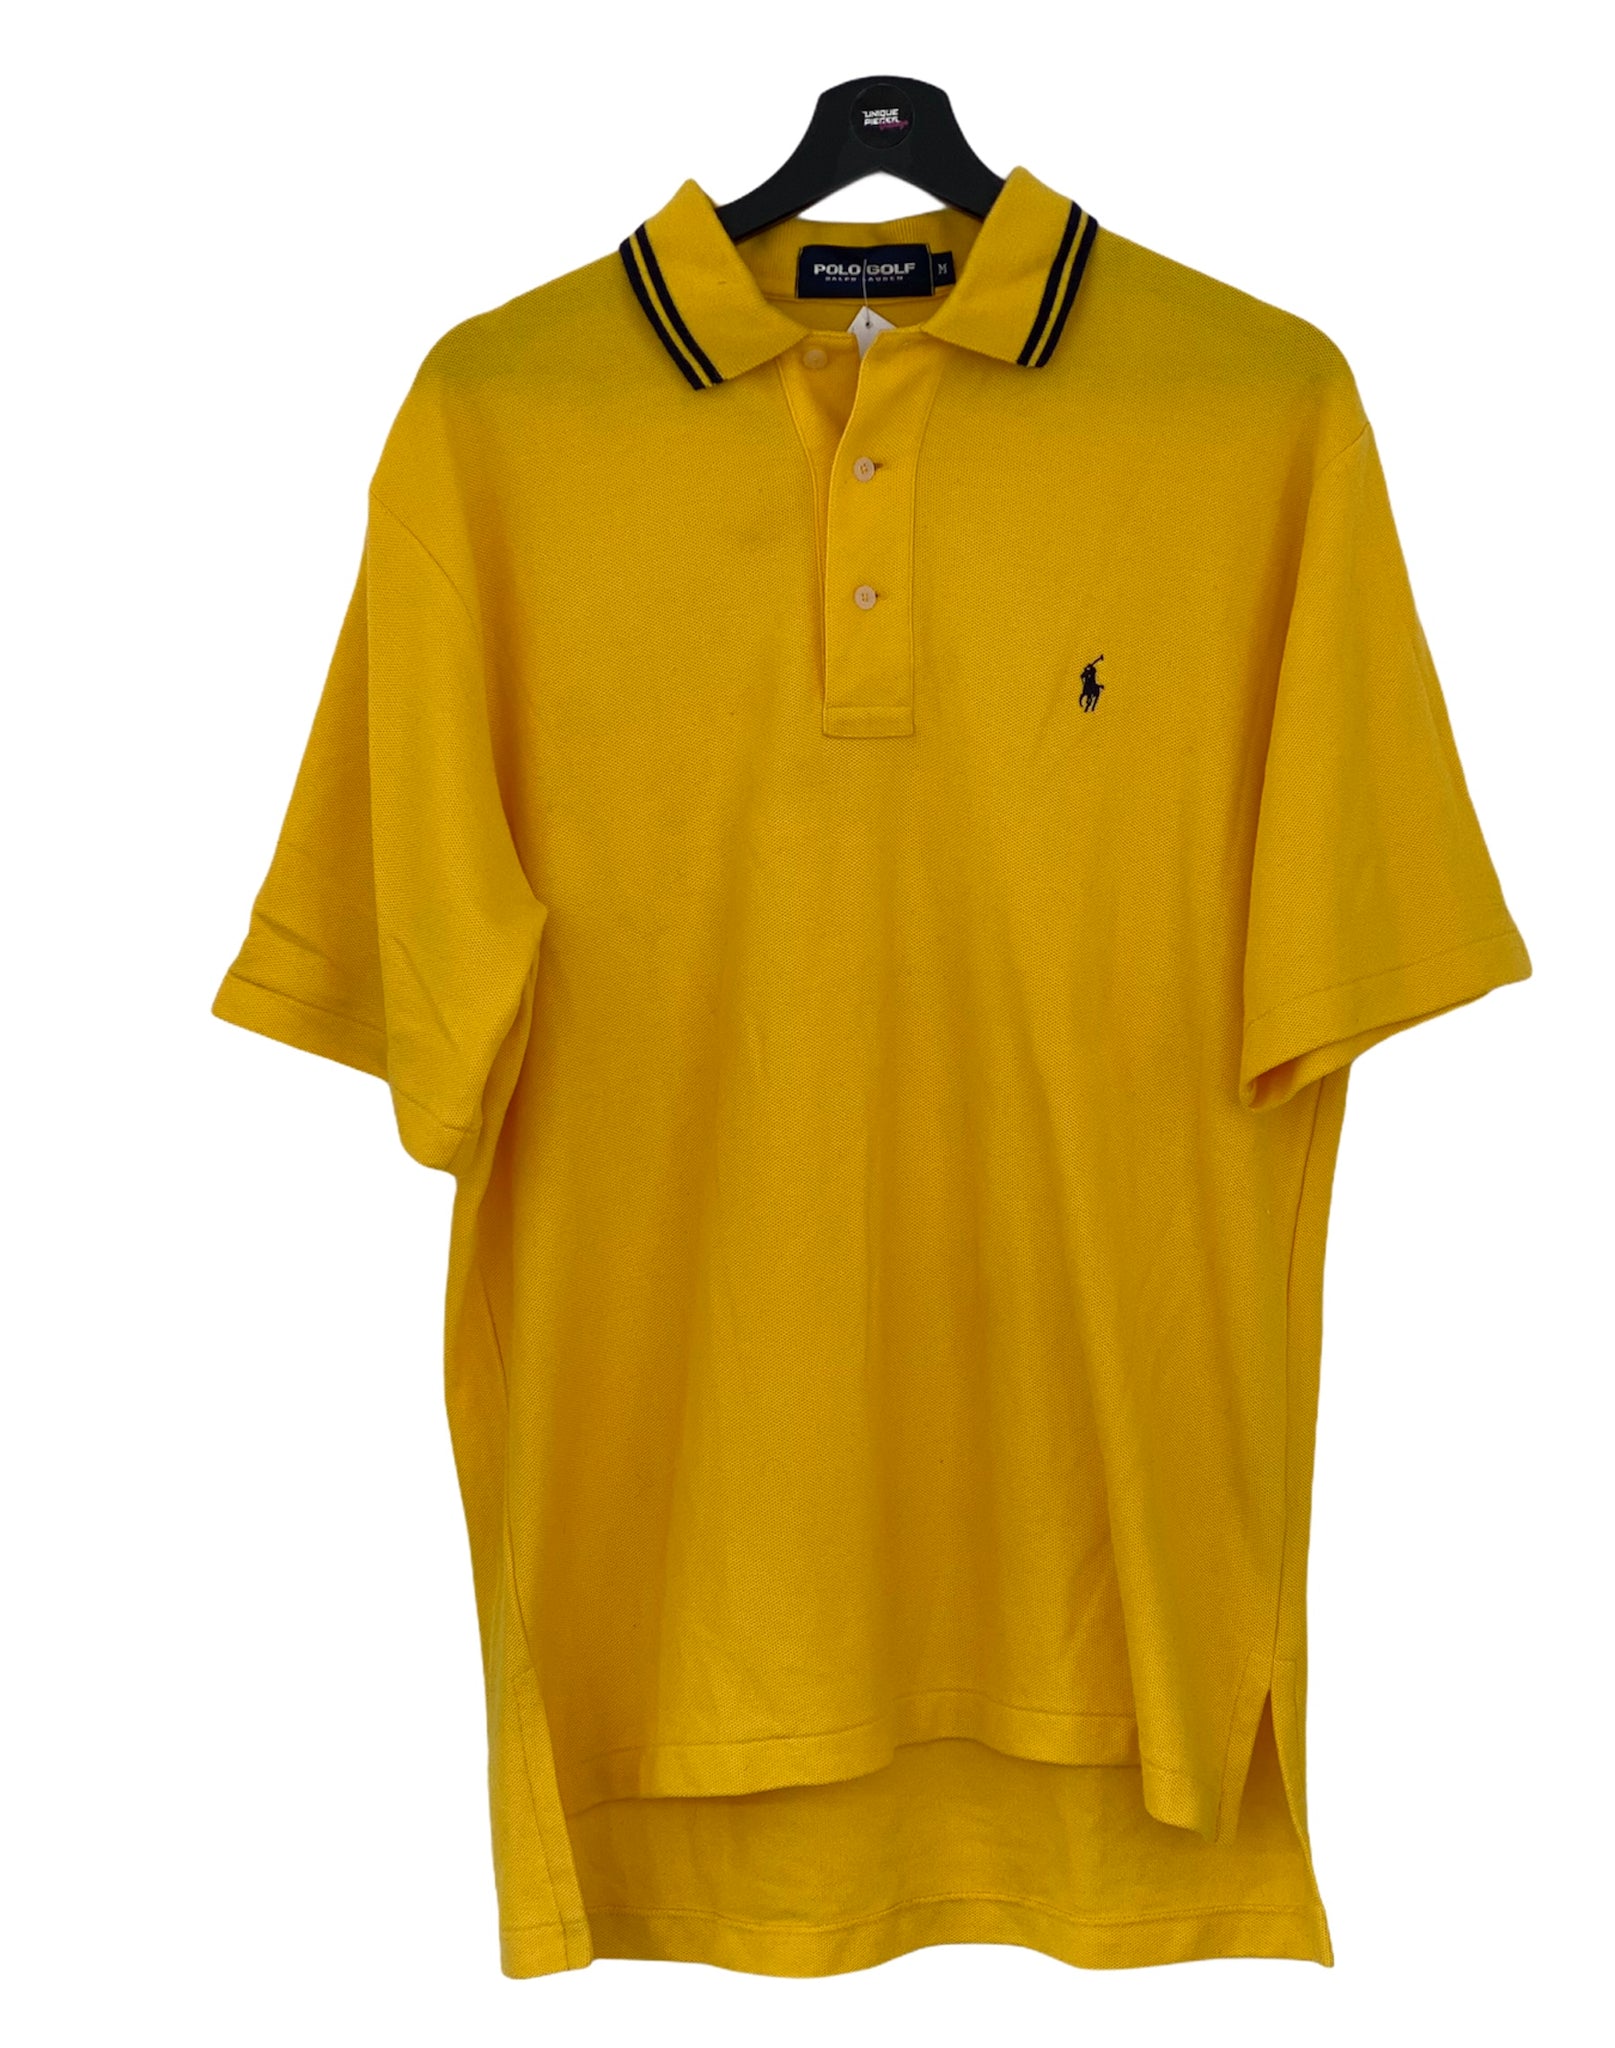 Ralph Lauren Polo Golf shirt yellow medium freeshipping - Unique Pieces Vintage